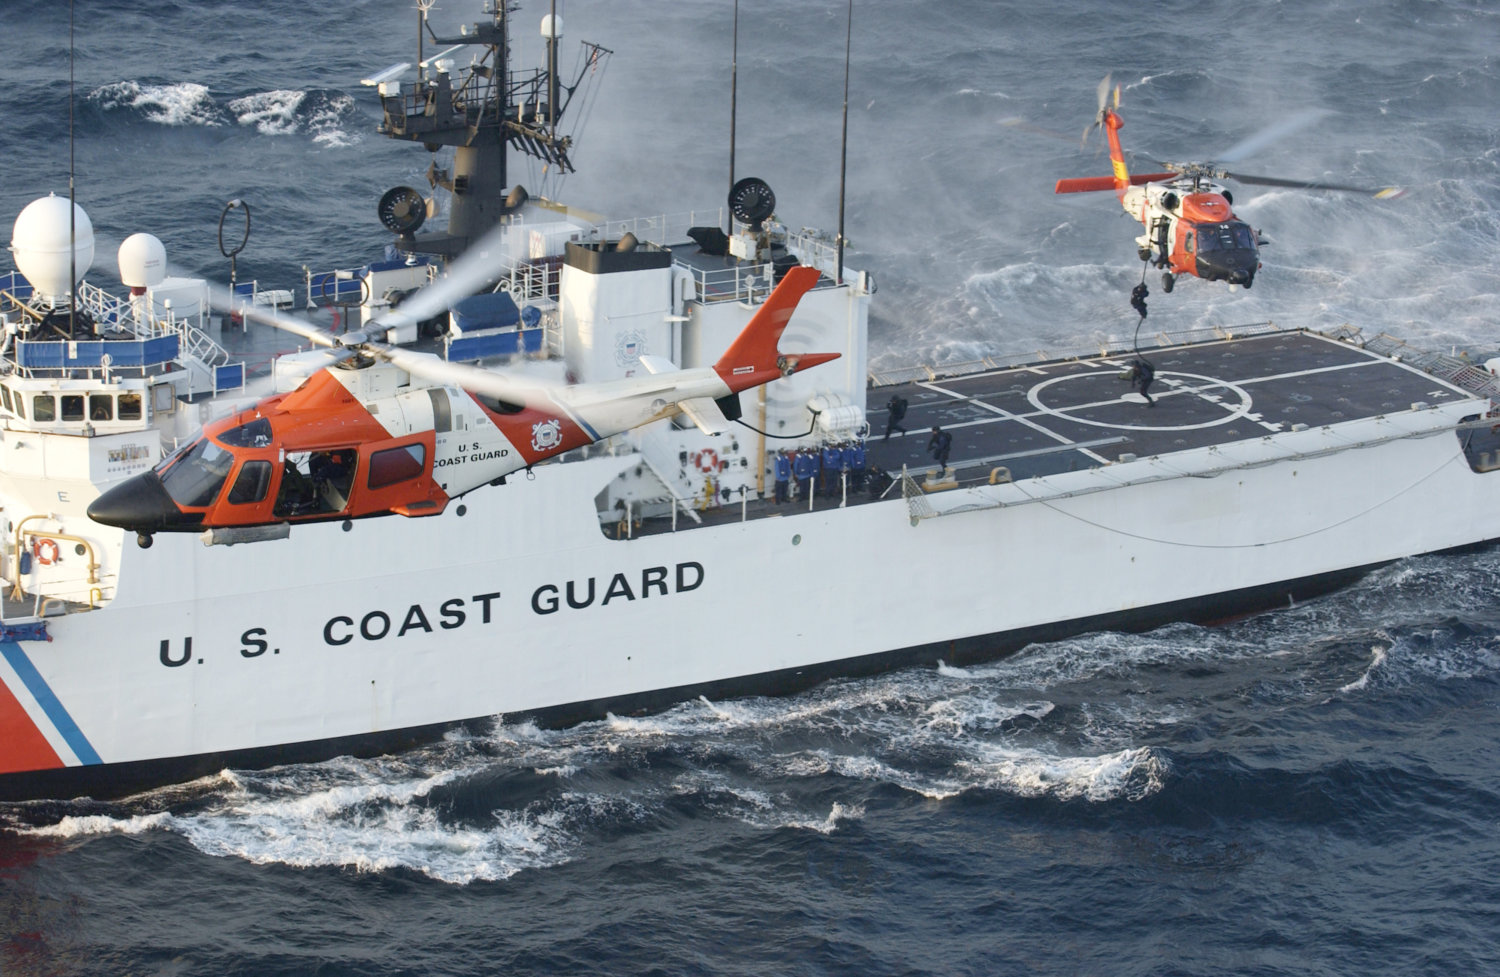 Coast guard having sex with navy wife